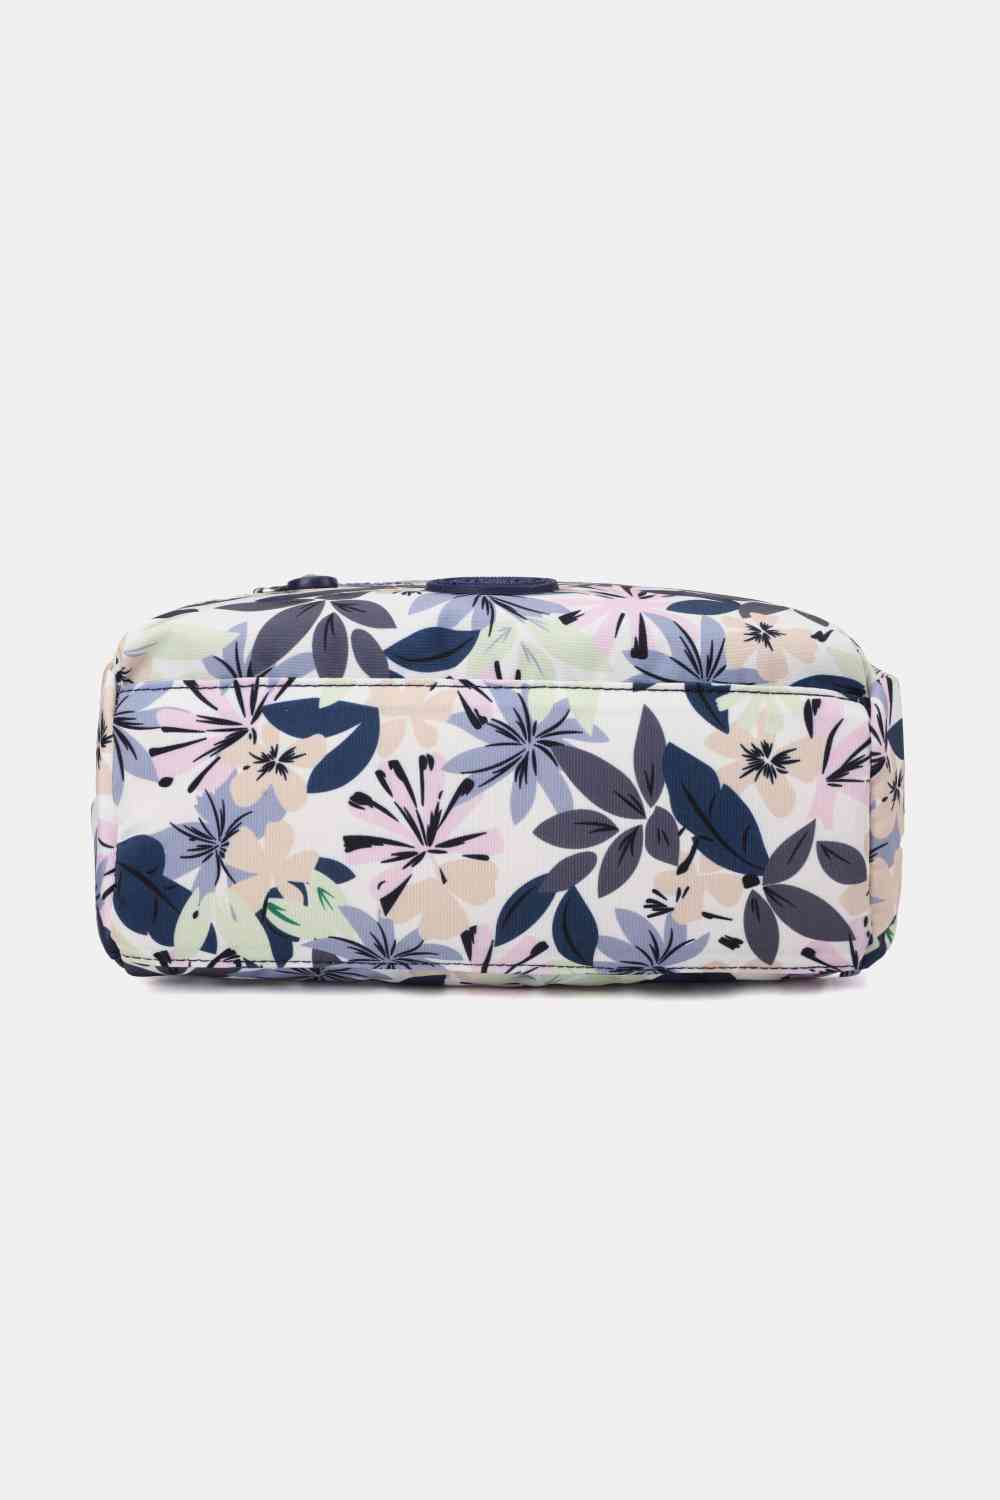 Floral Nylon Handbag